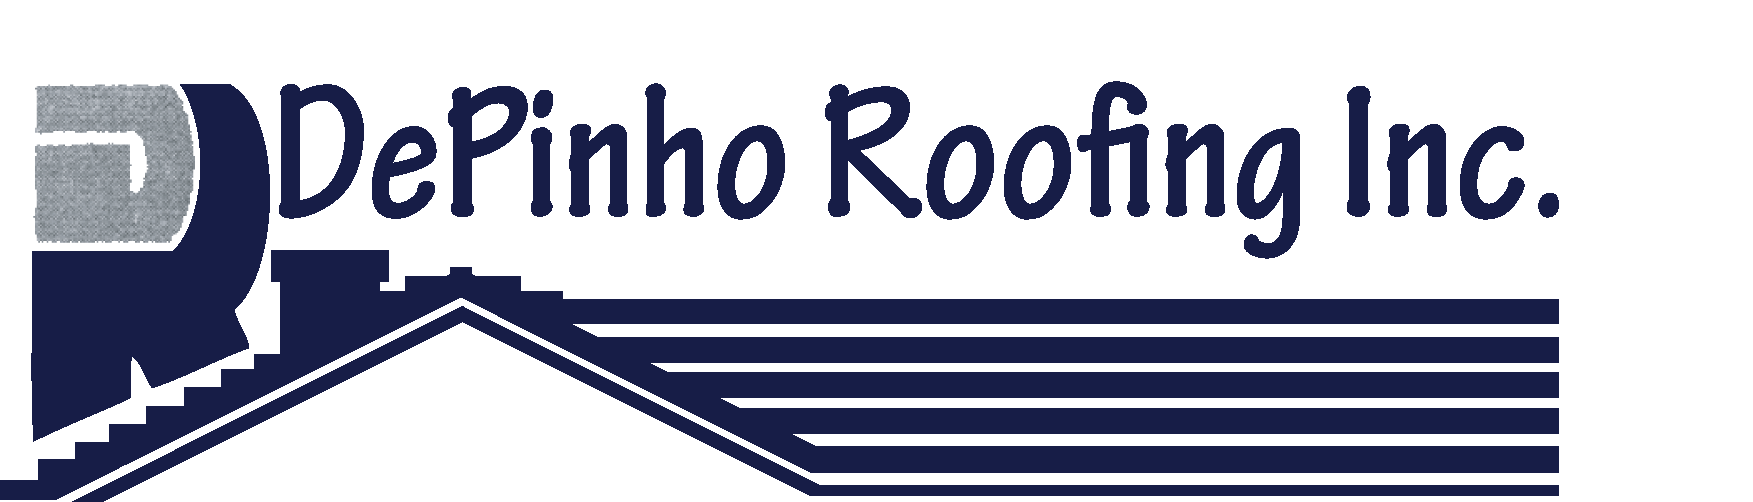 Turner Roofing Co. logo